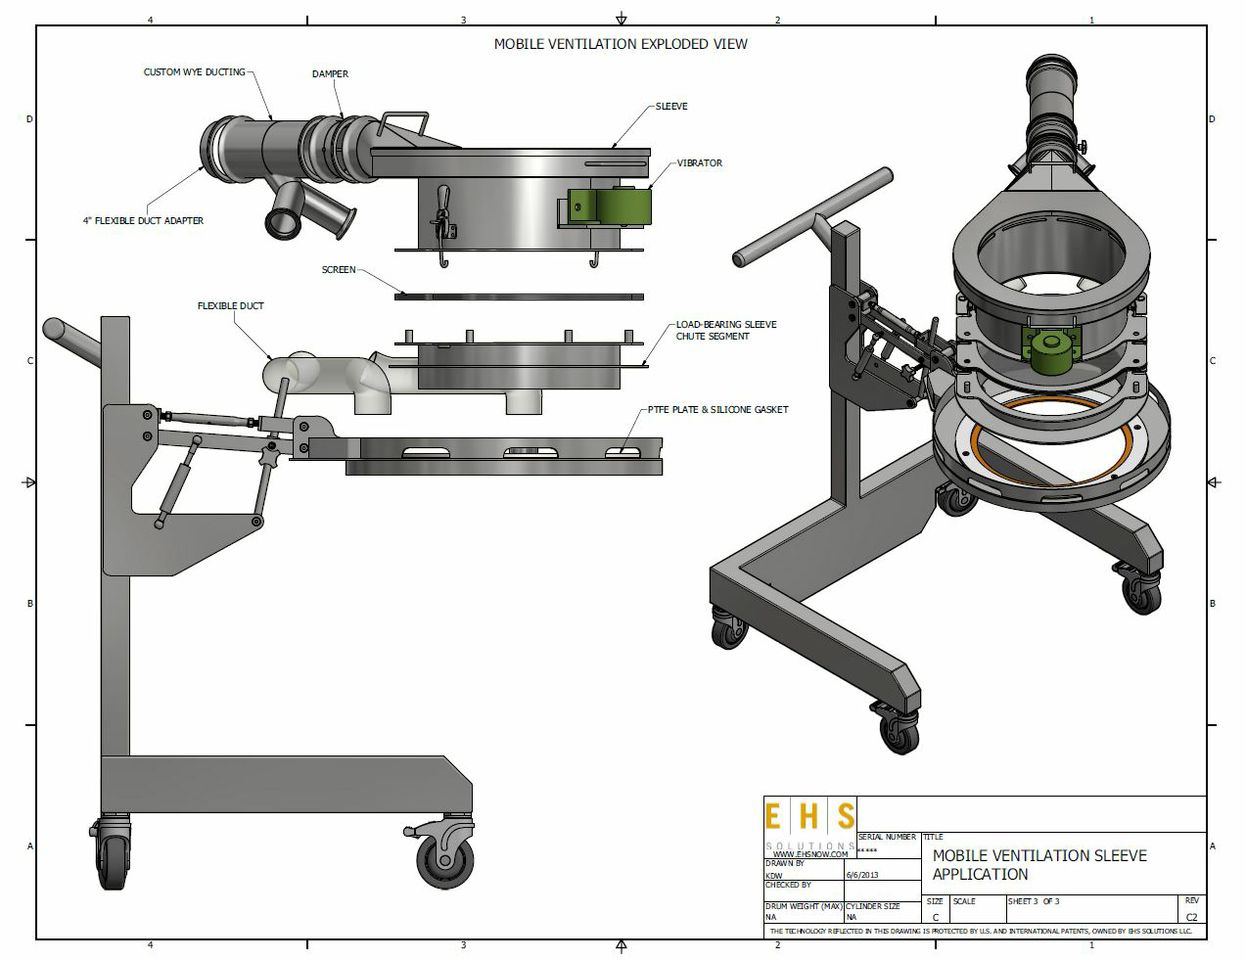 Another engineering drawing of Rheo' Rheo Product Screener